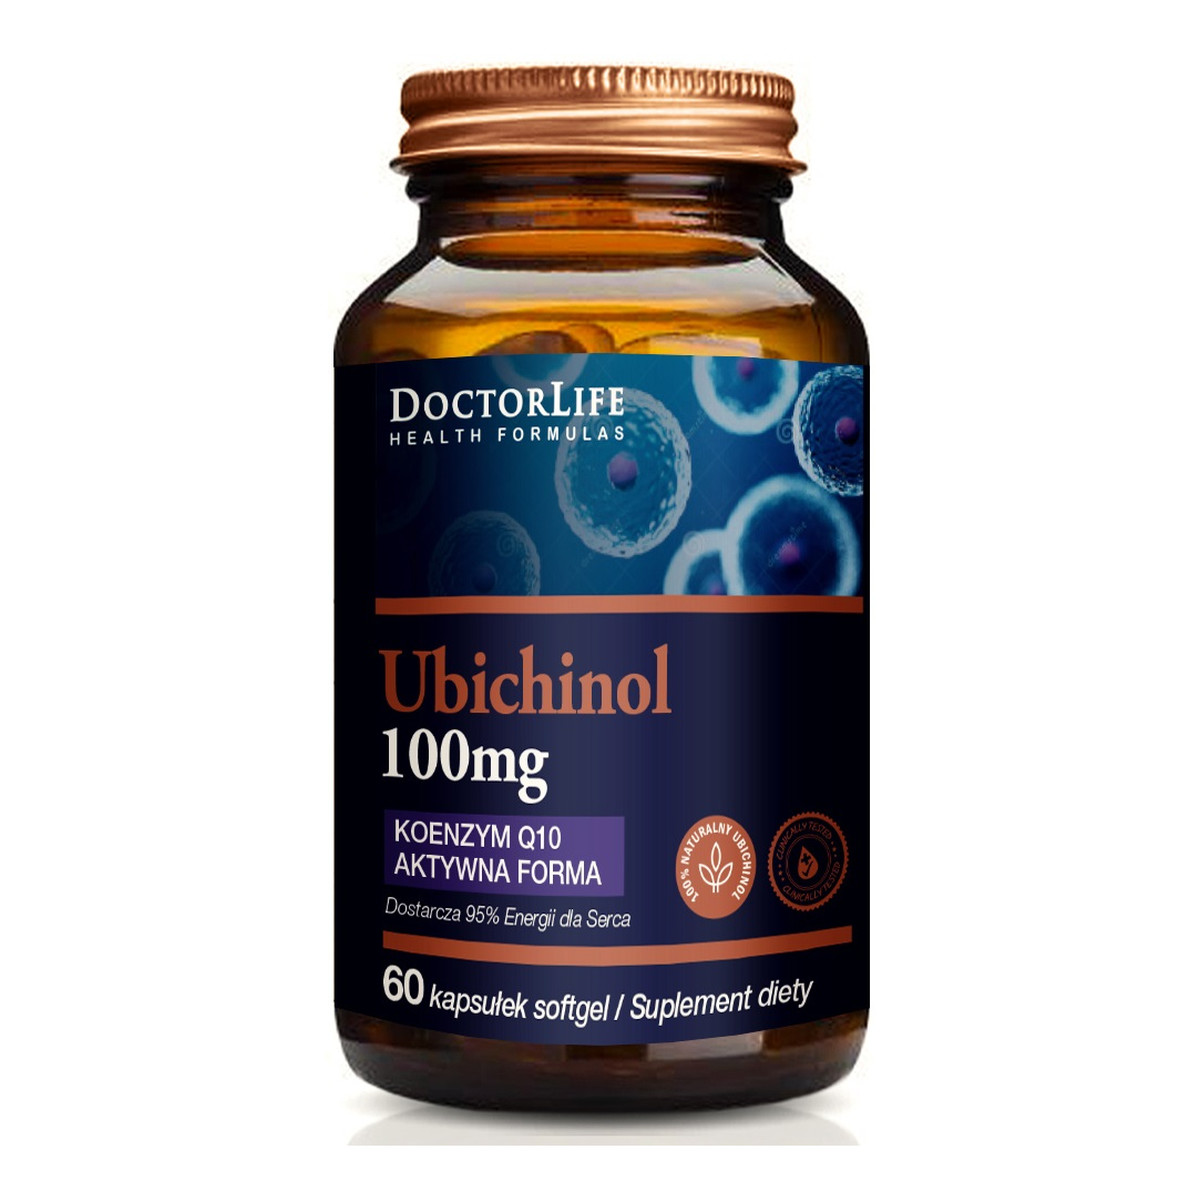 Doctor Life Ubichinol koenzym q10 aktywna forma 100mg suplement diety 60 kapsułek